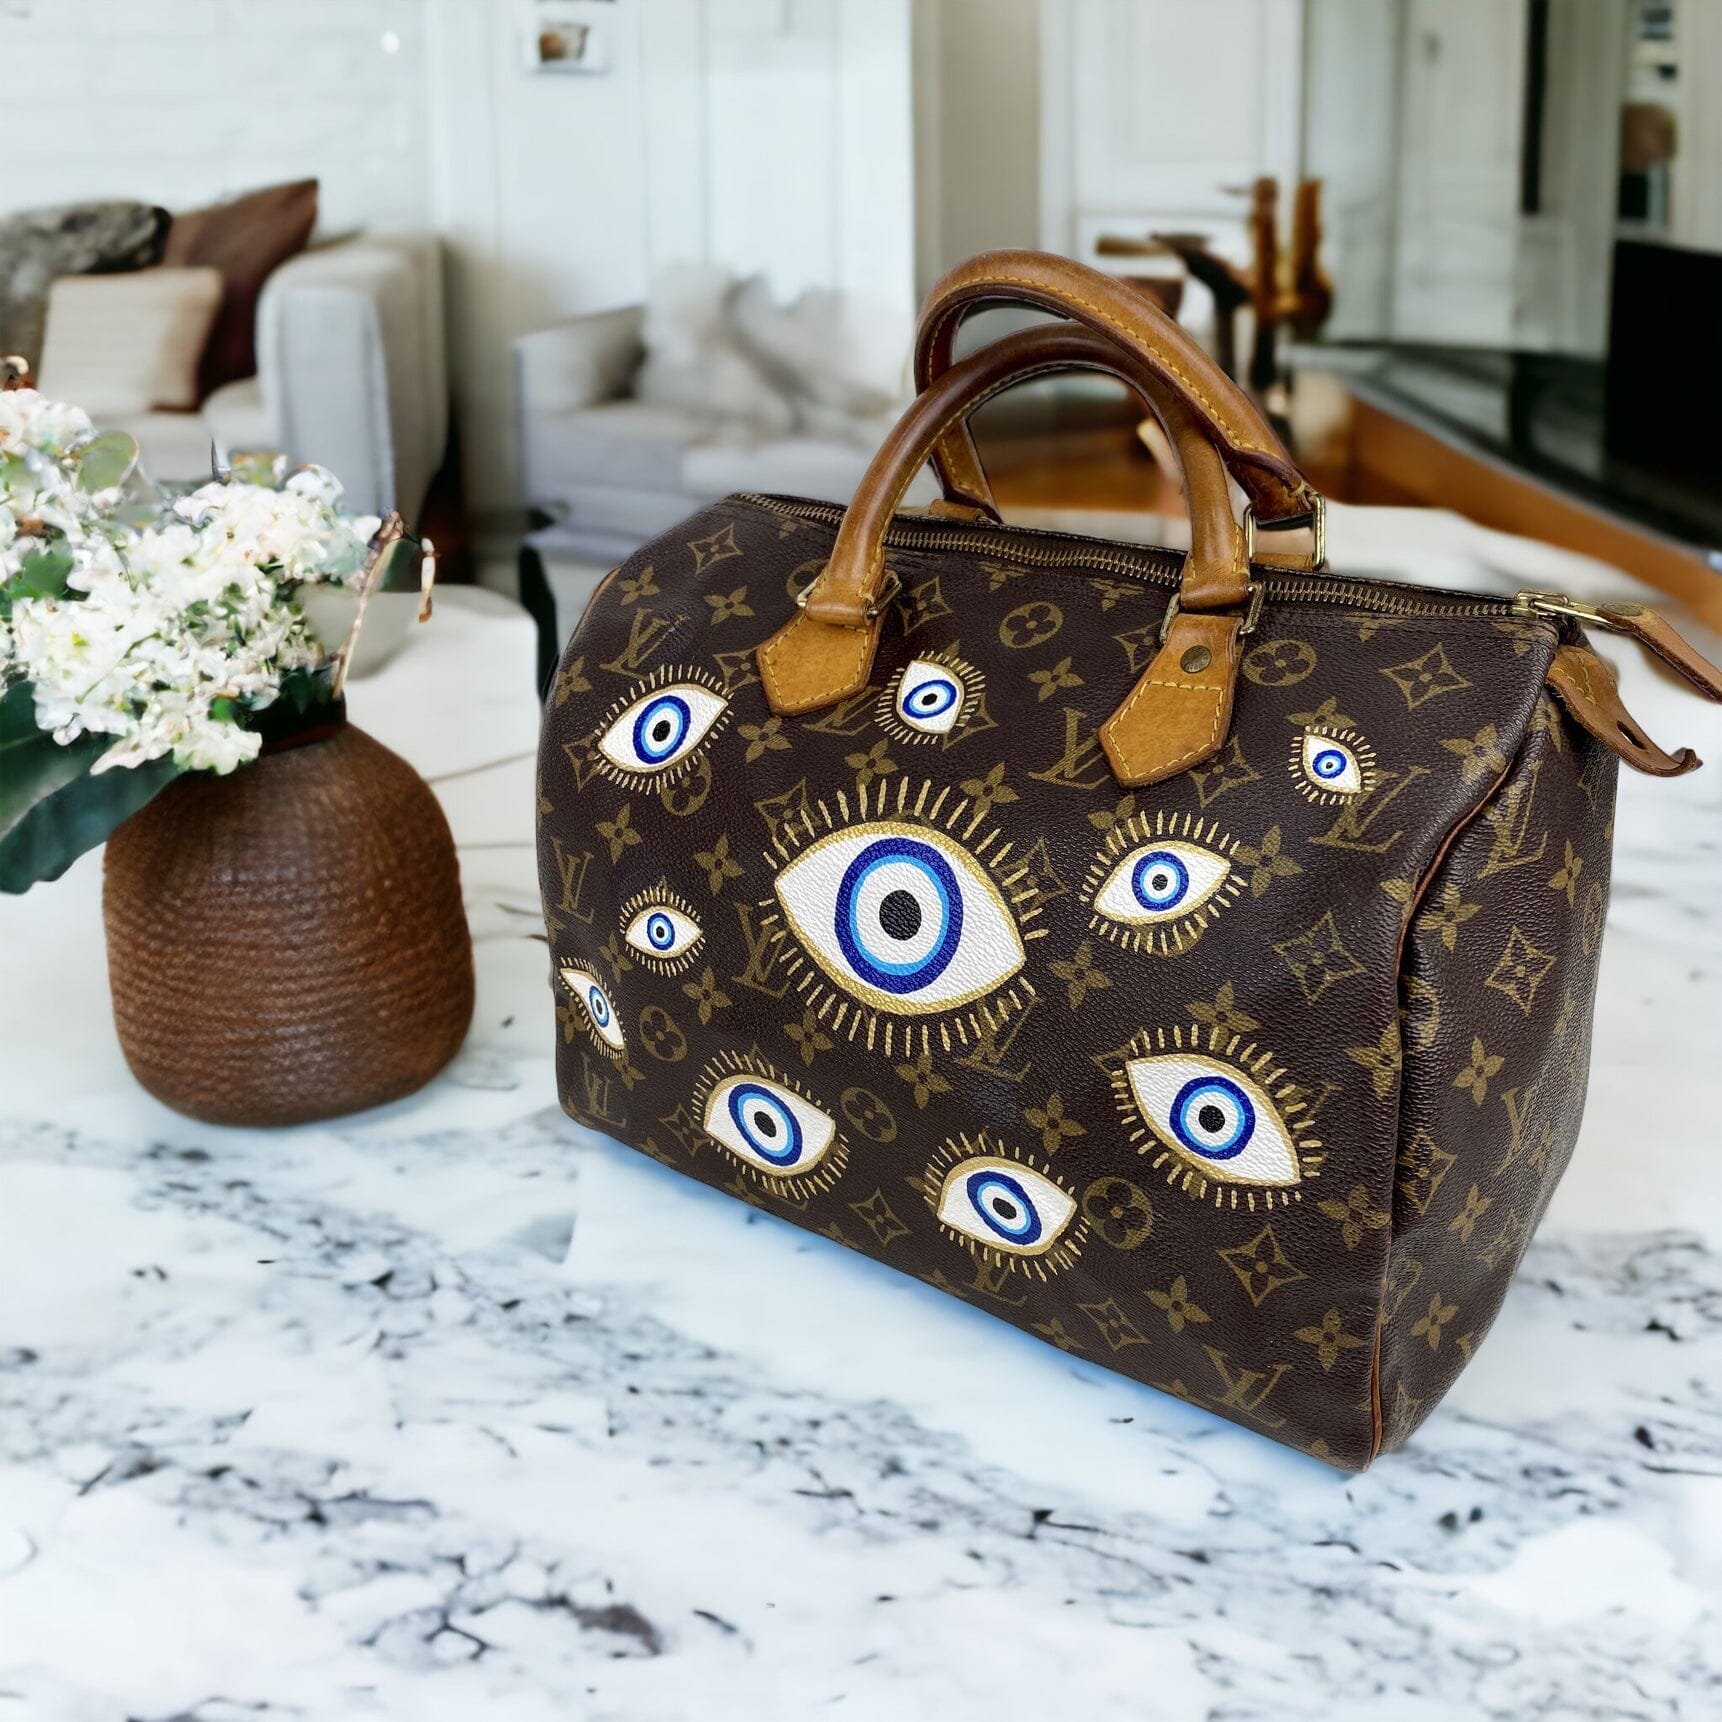 Vintage Luxury Designer Bags and Accessories